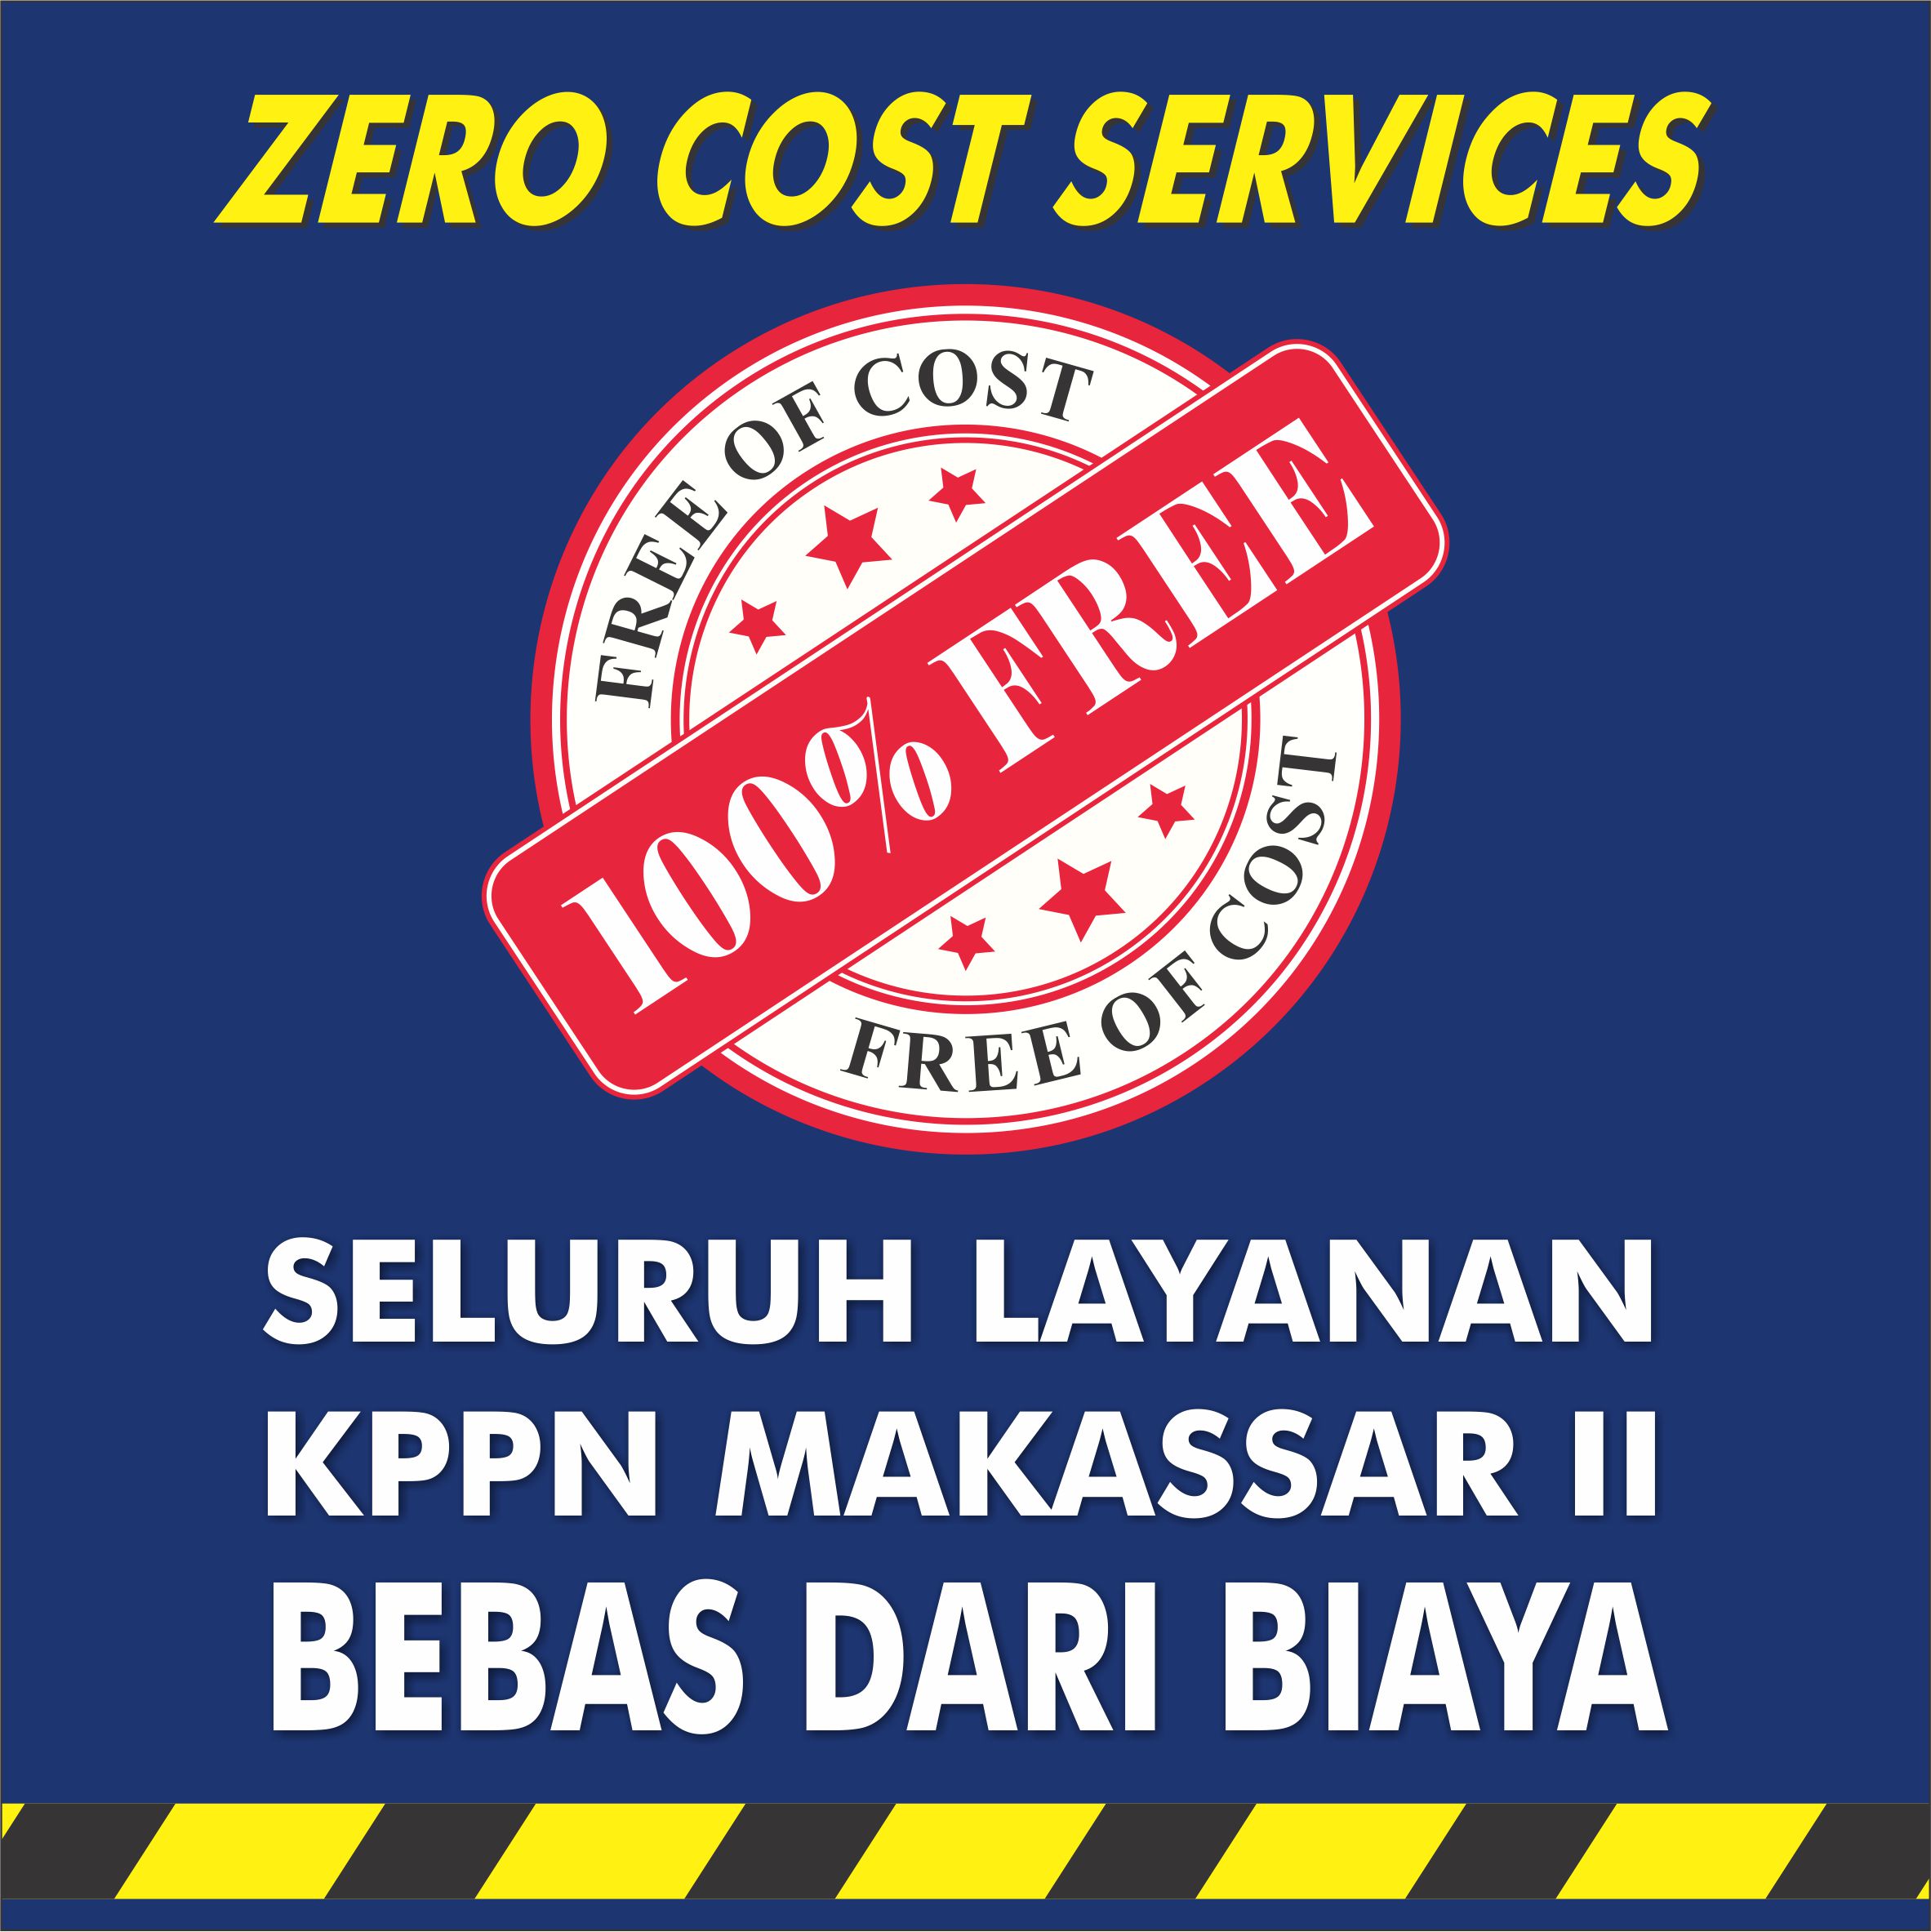 KPPN Makassar II Zero Cost Services